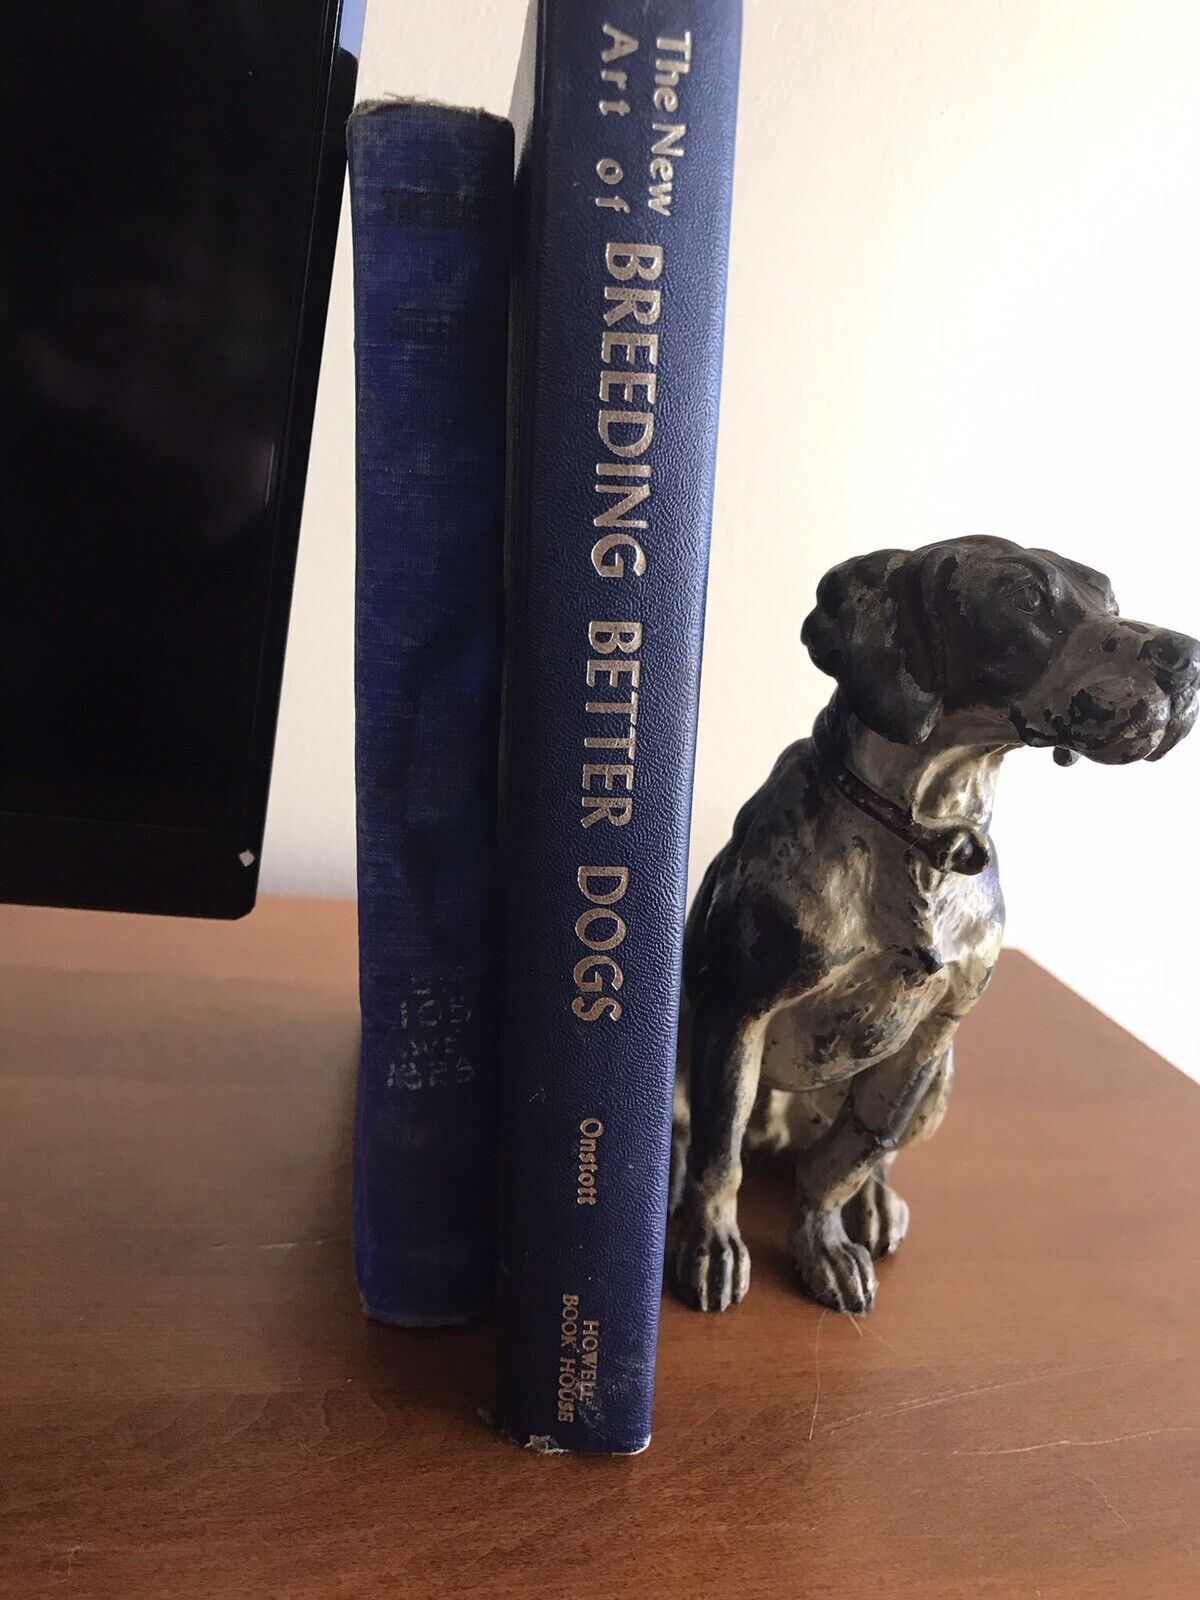 Basics of Breeding rare vintage dog books